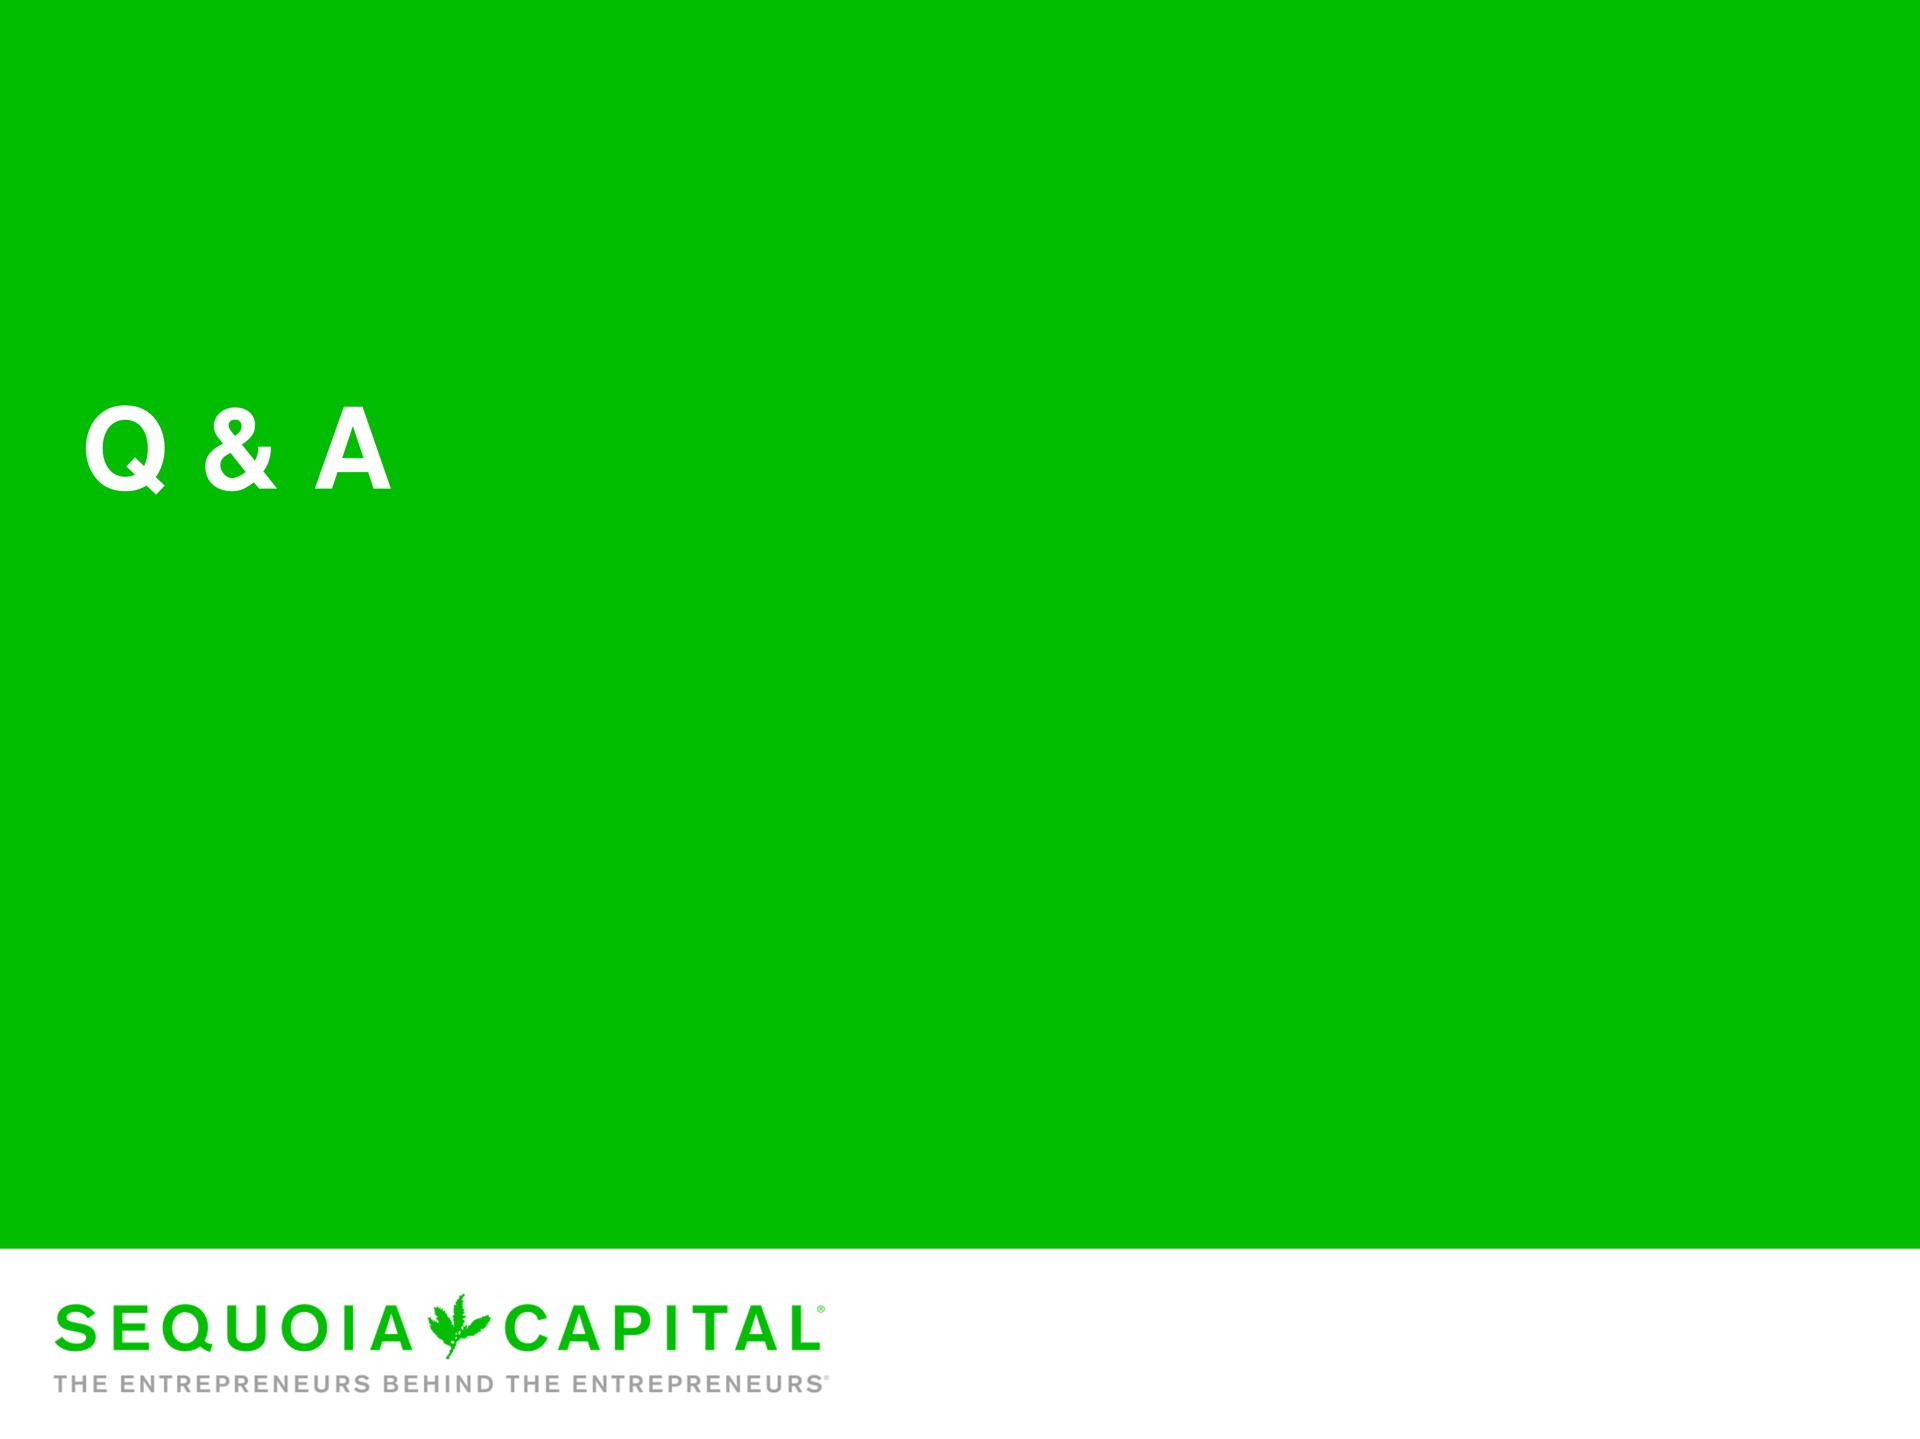 a | Sequoia Capital